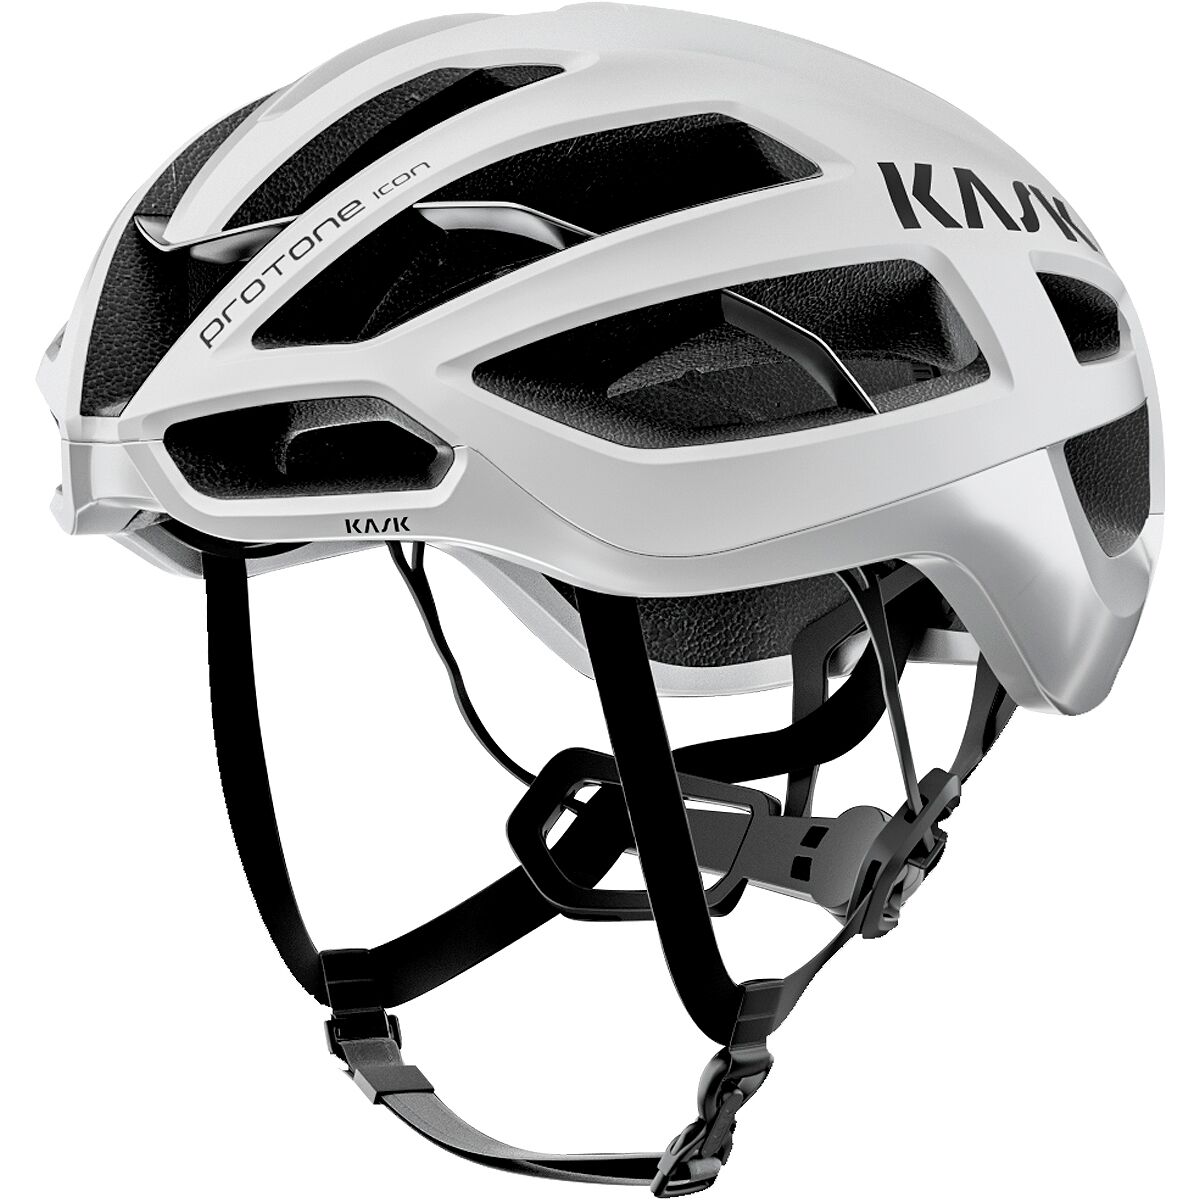 Photos - Protective Gear Set Kask Protone Icon Helmet 